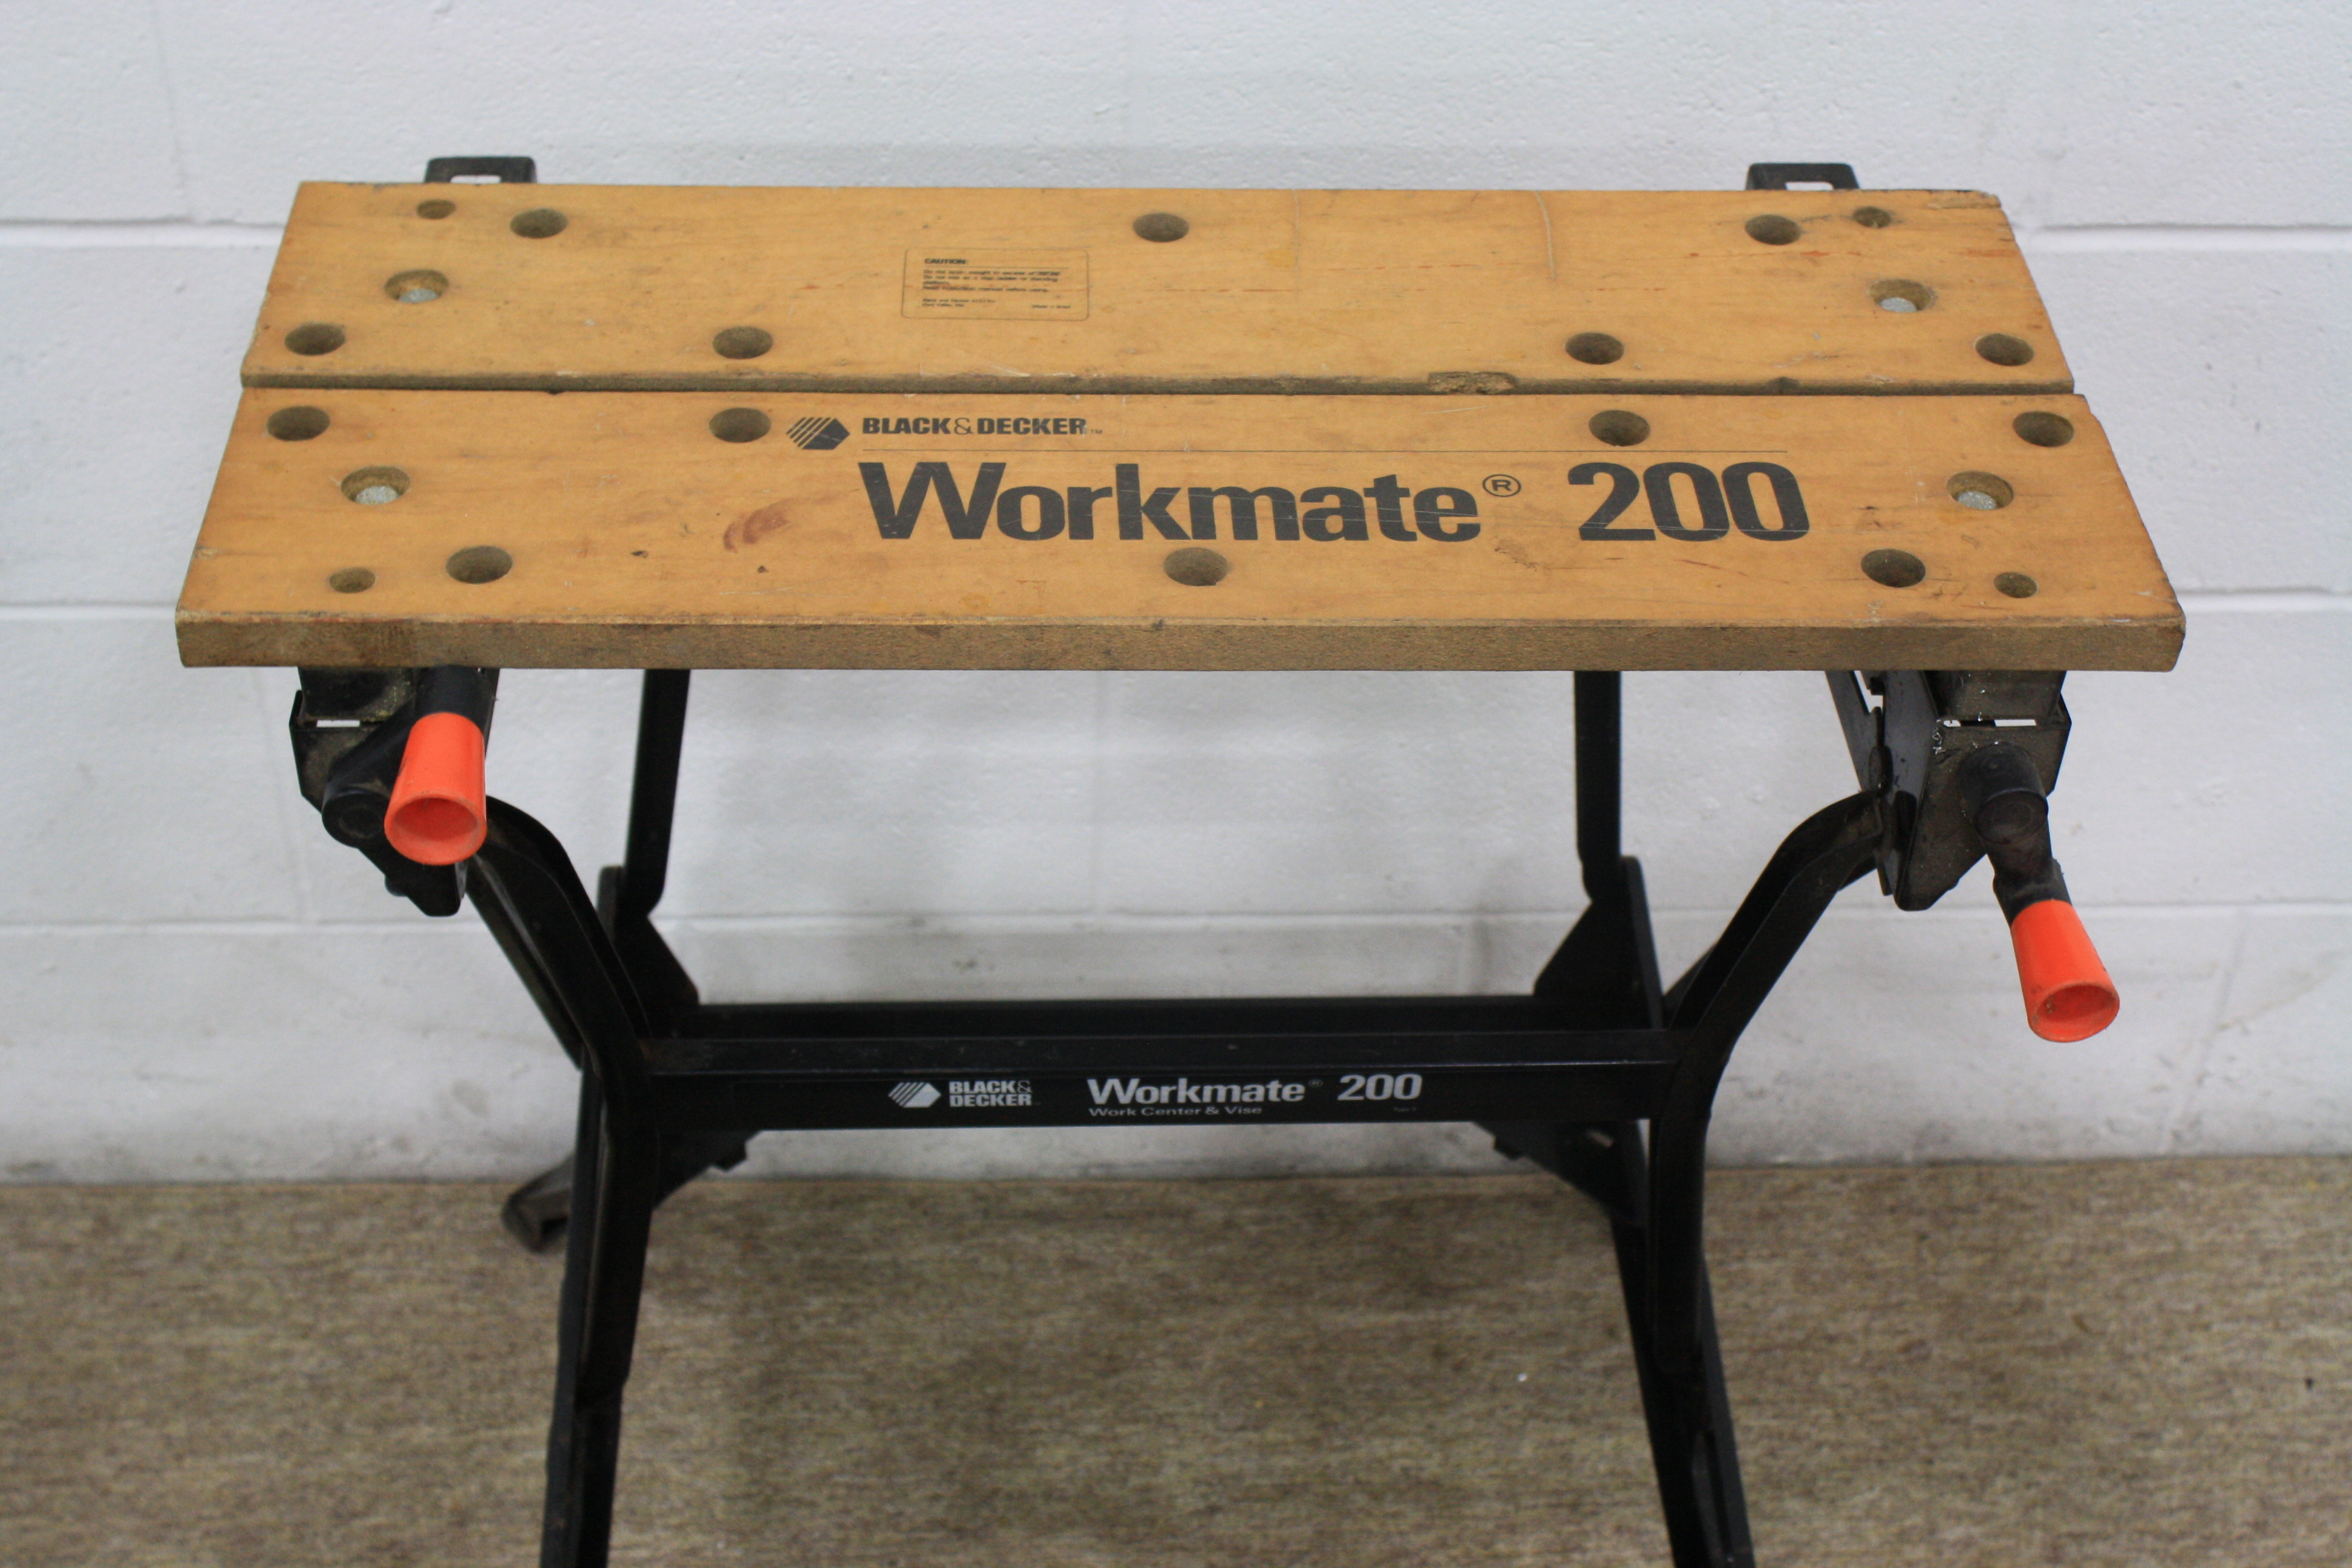 Black & Decker Workmate 200 fold up workbench is